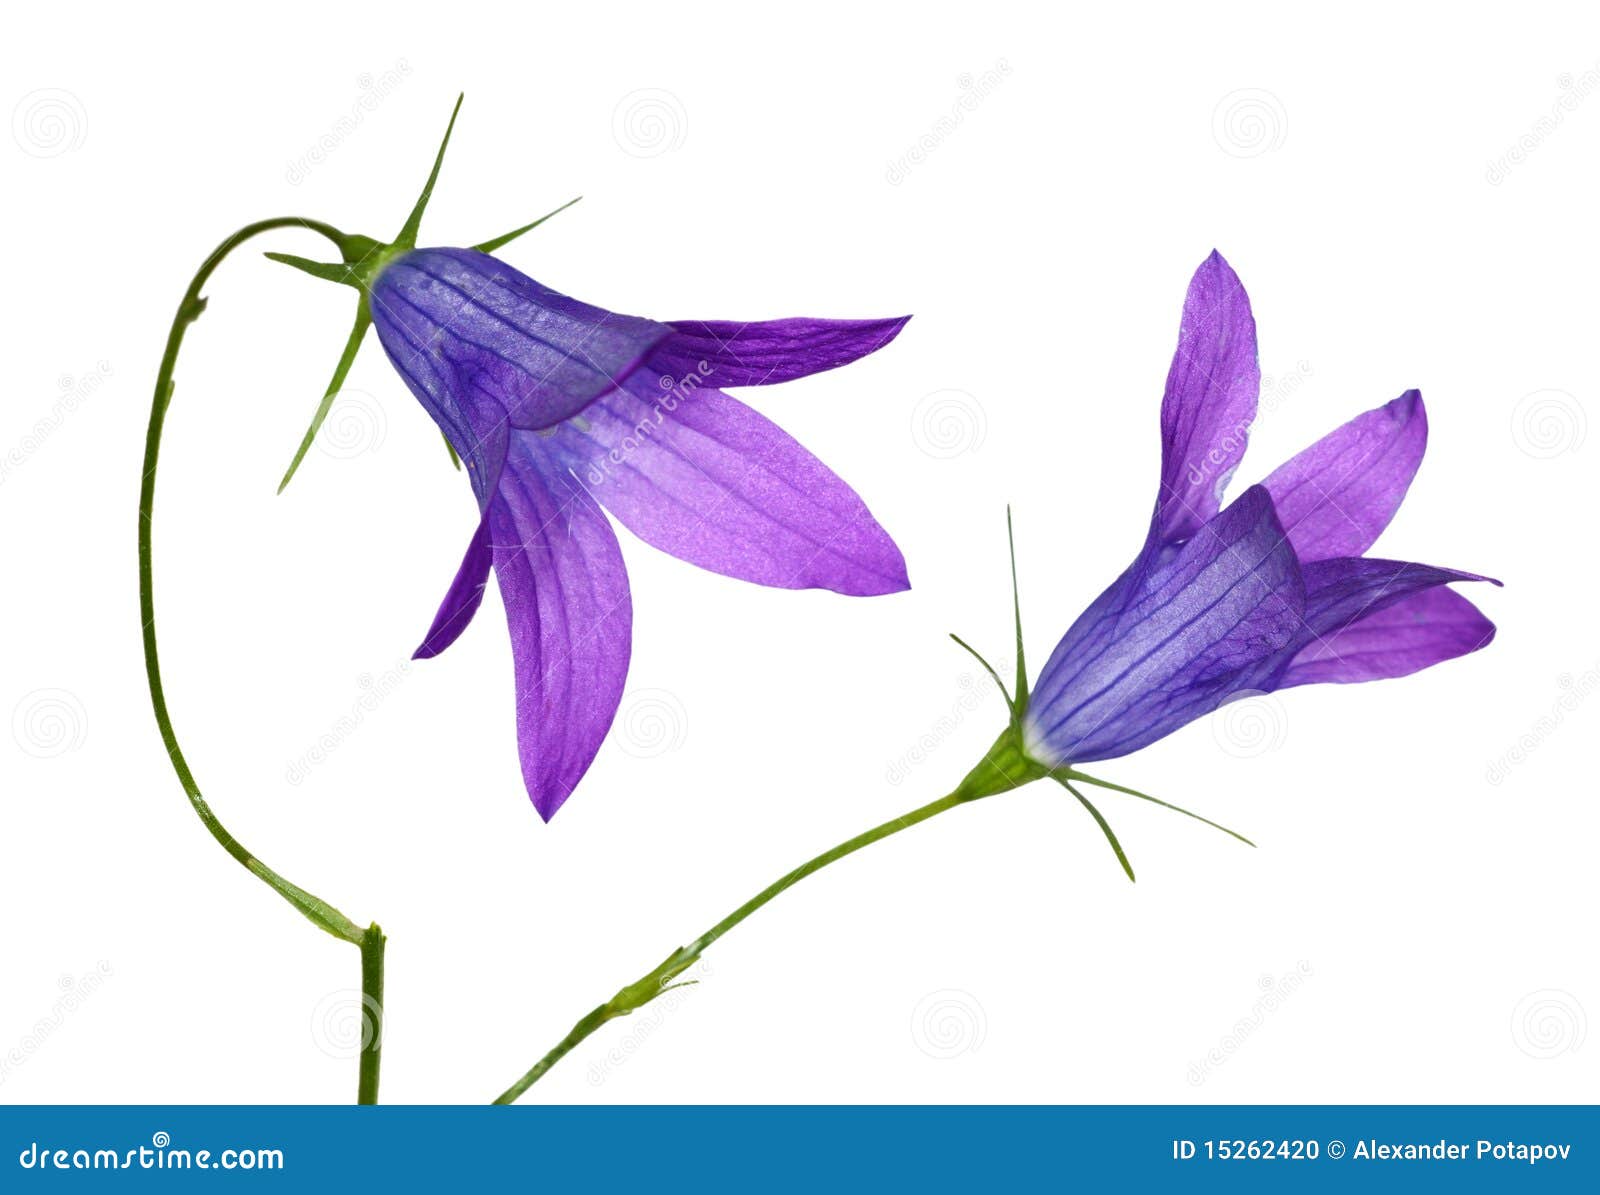 two blue campanula flowers